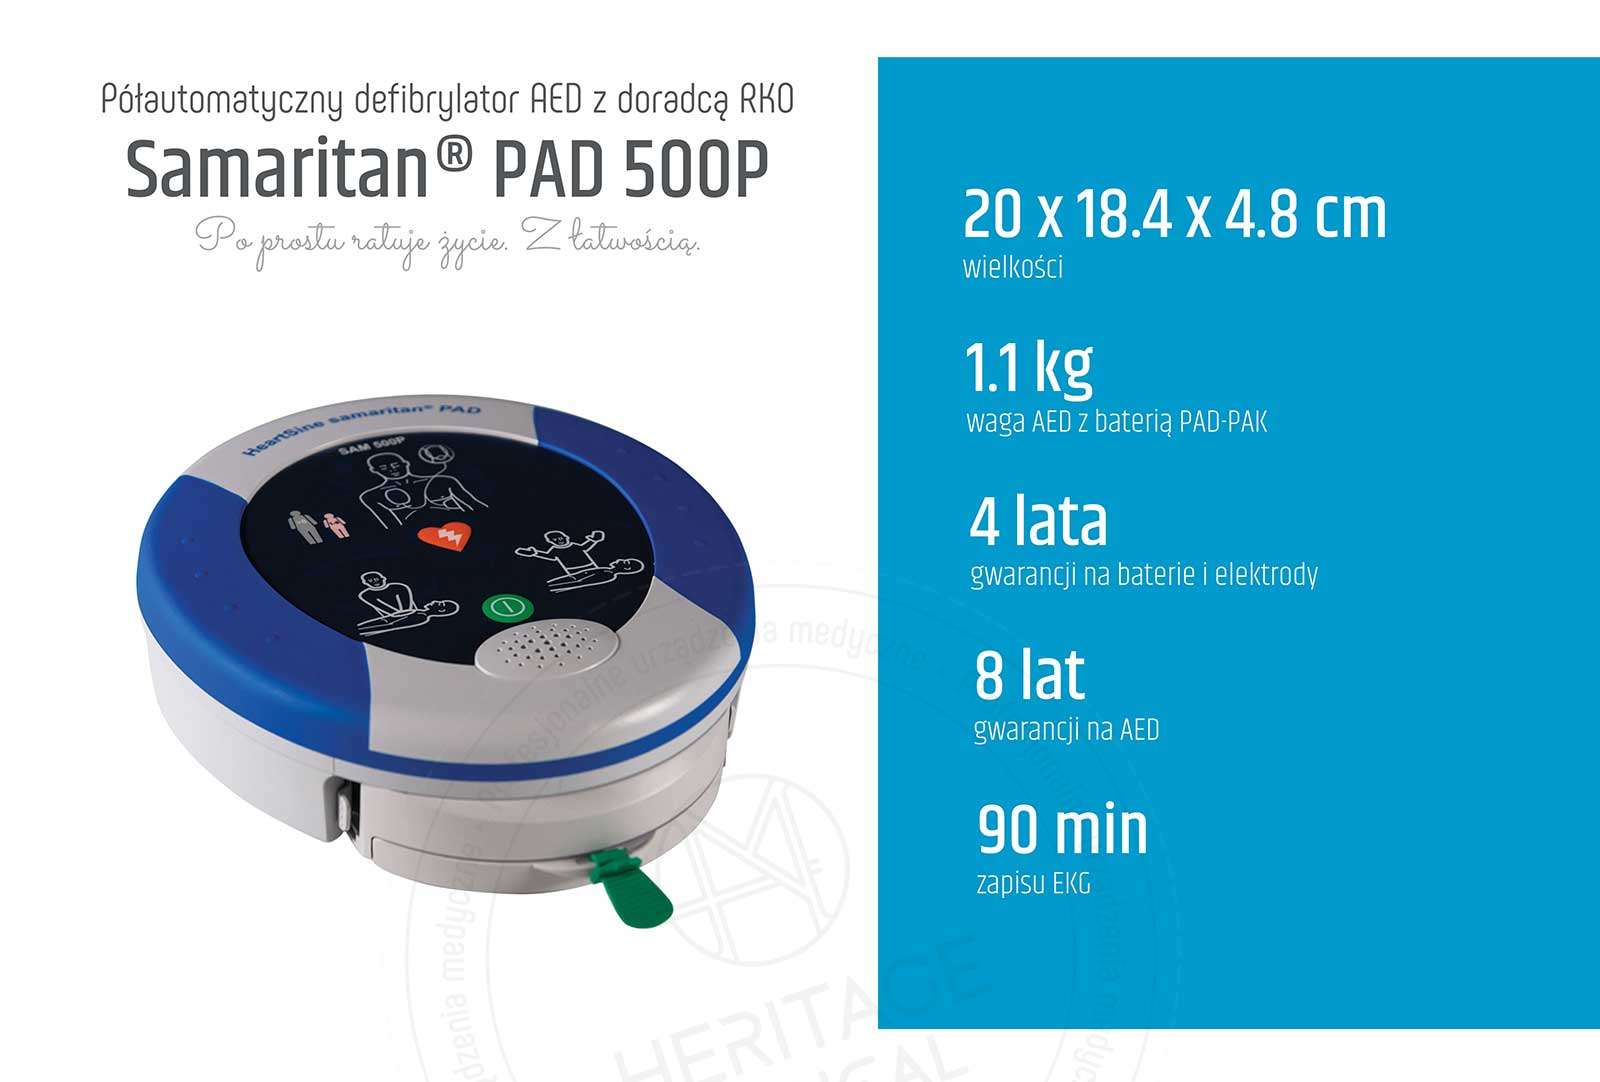 Zalety defibrylatora SAM 500P